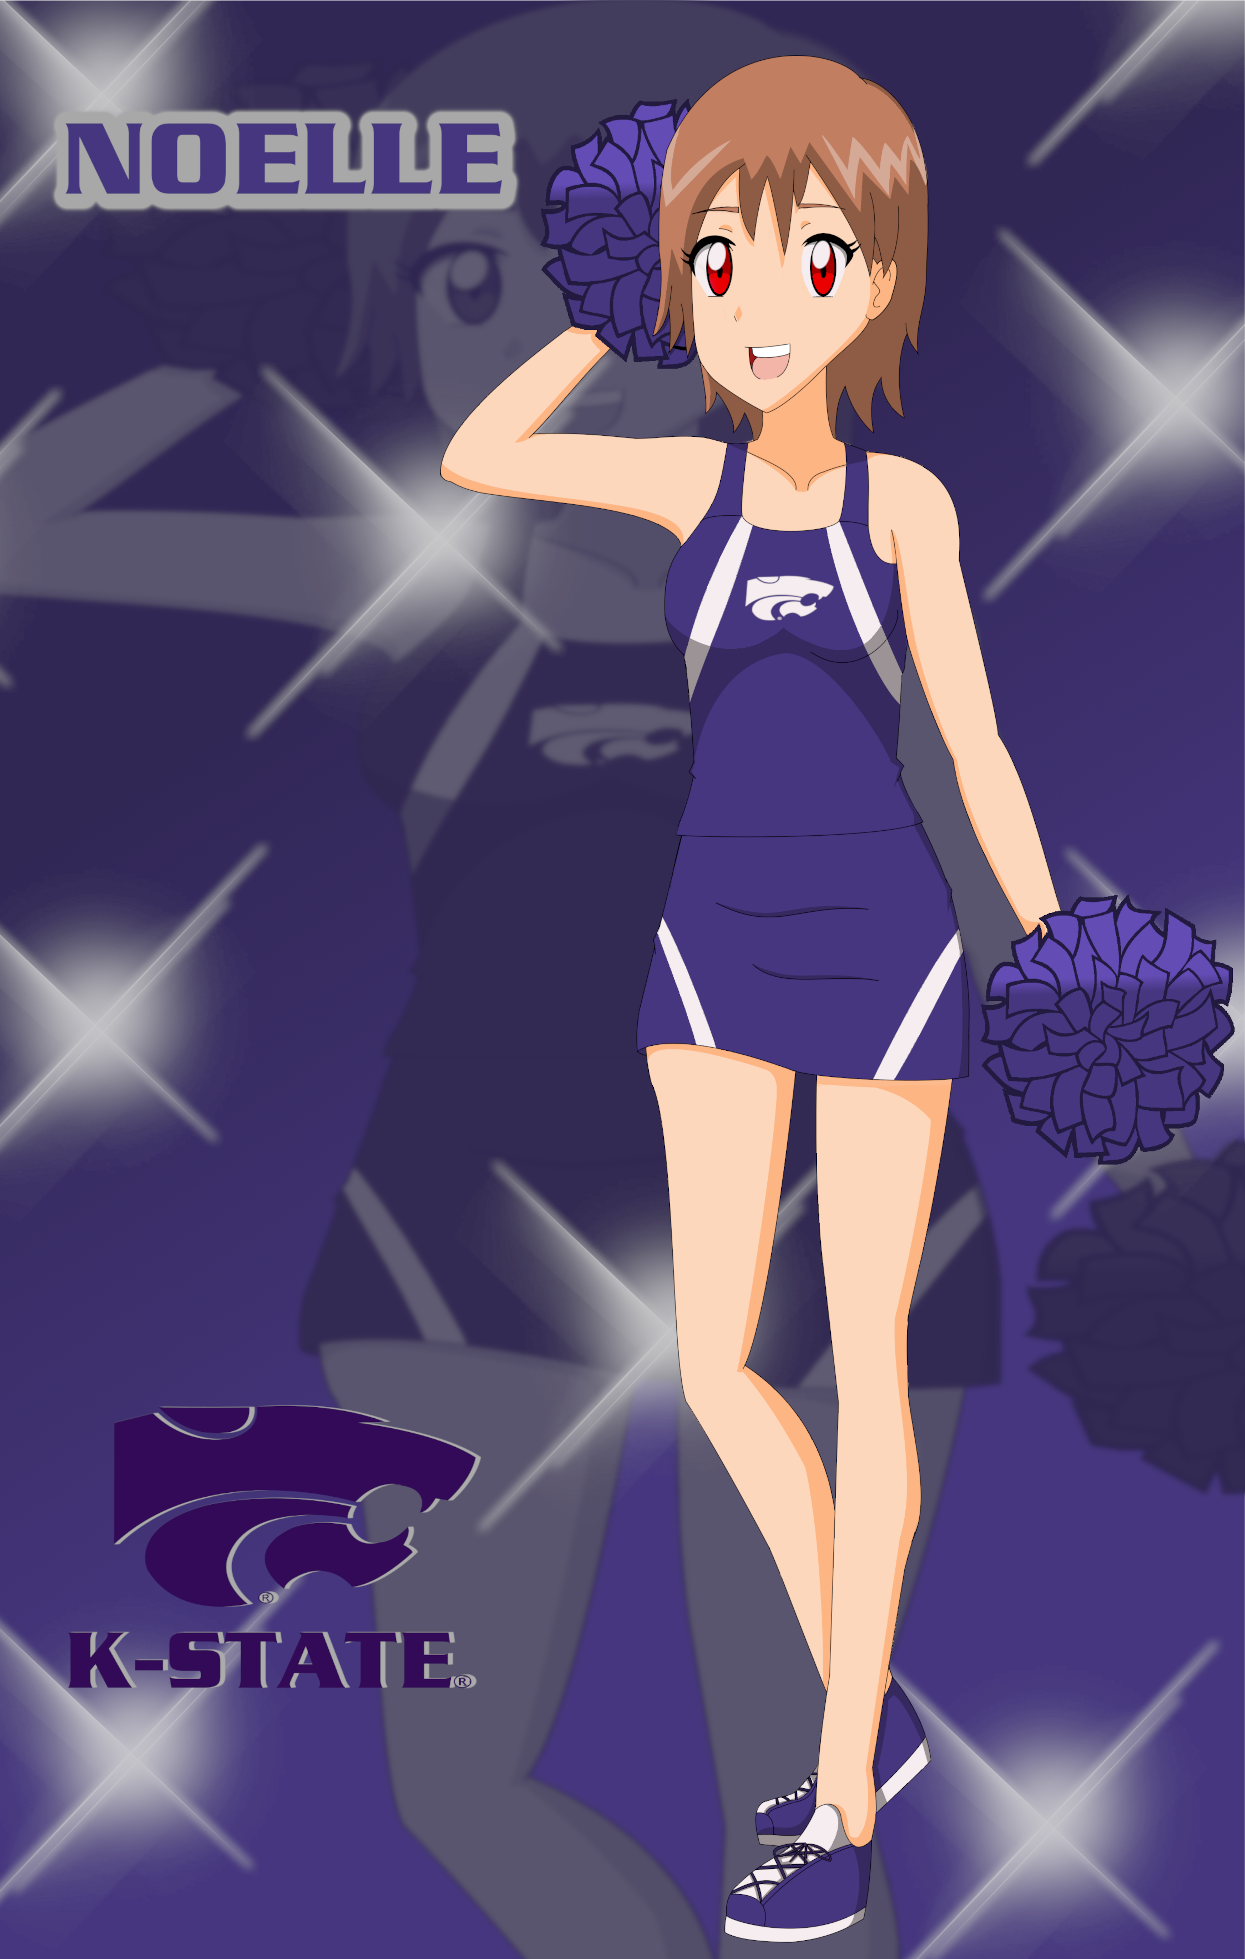 Noelle as a K-State cheerleader by RevolutionHellCowboy